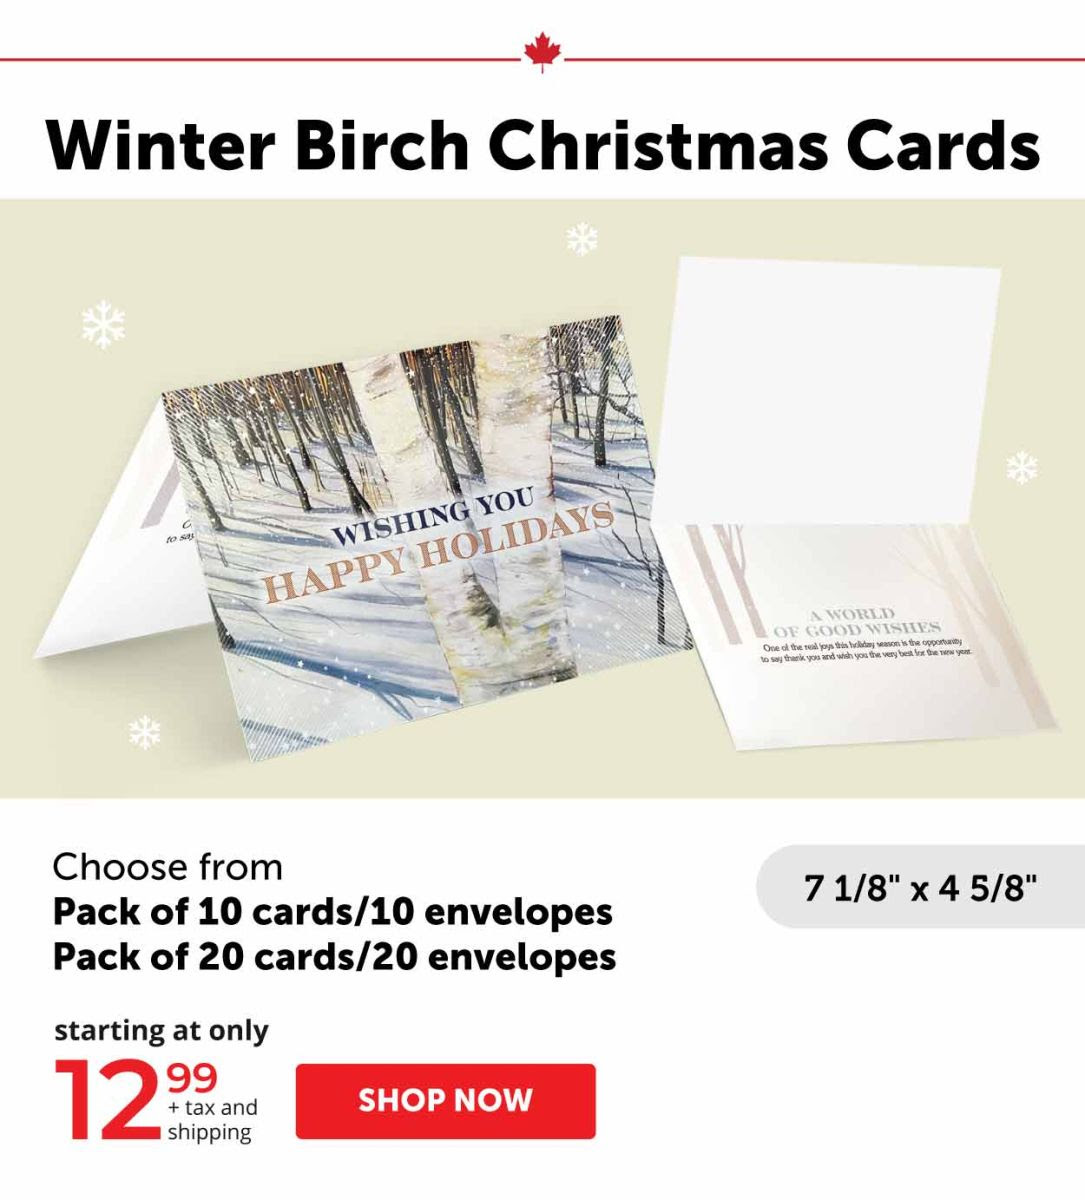 Winter Birch Christmas Cards